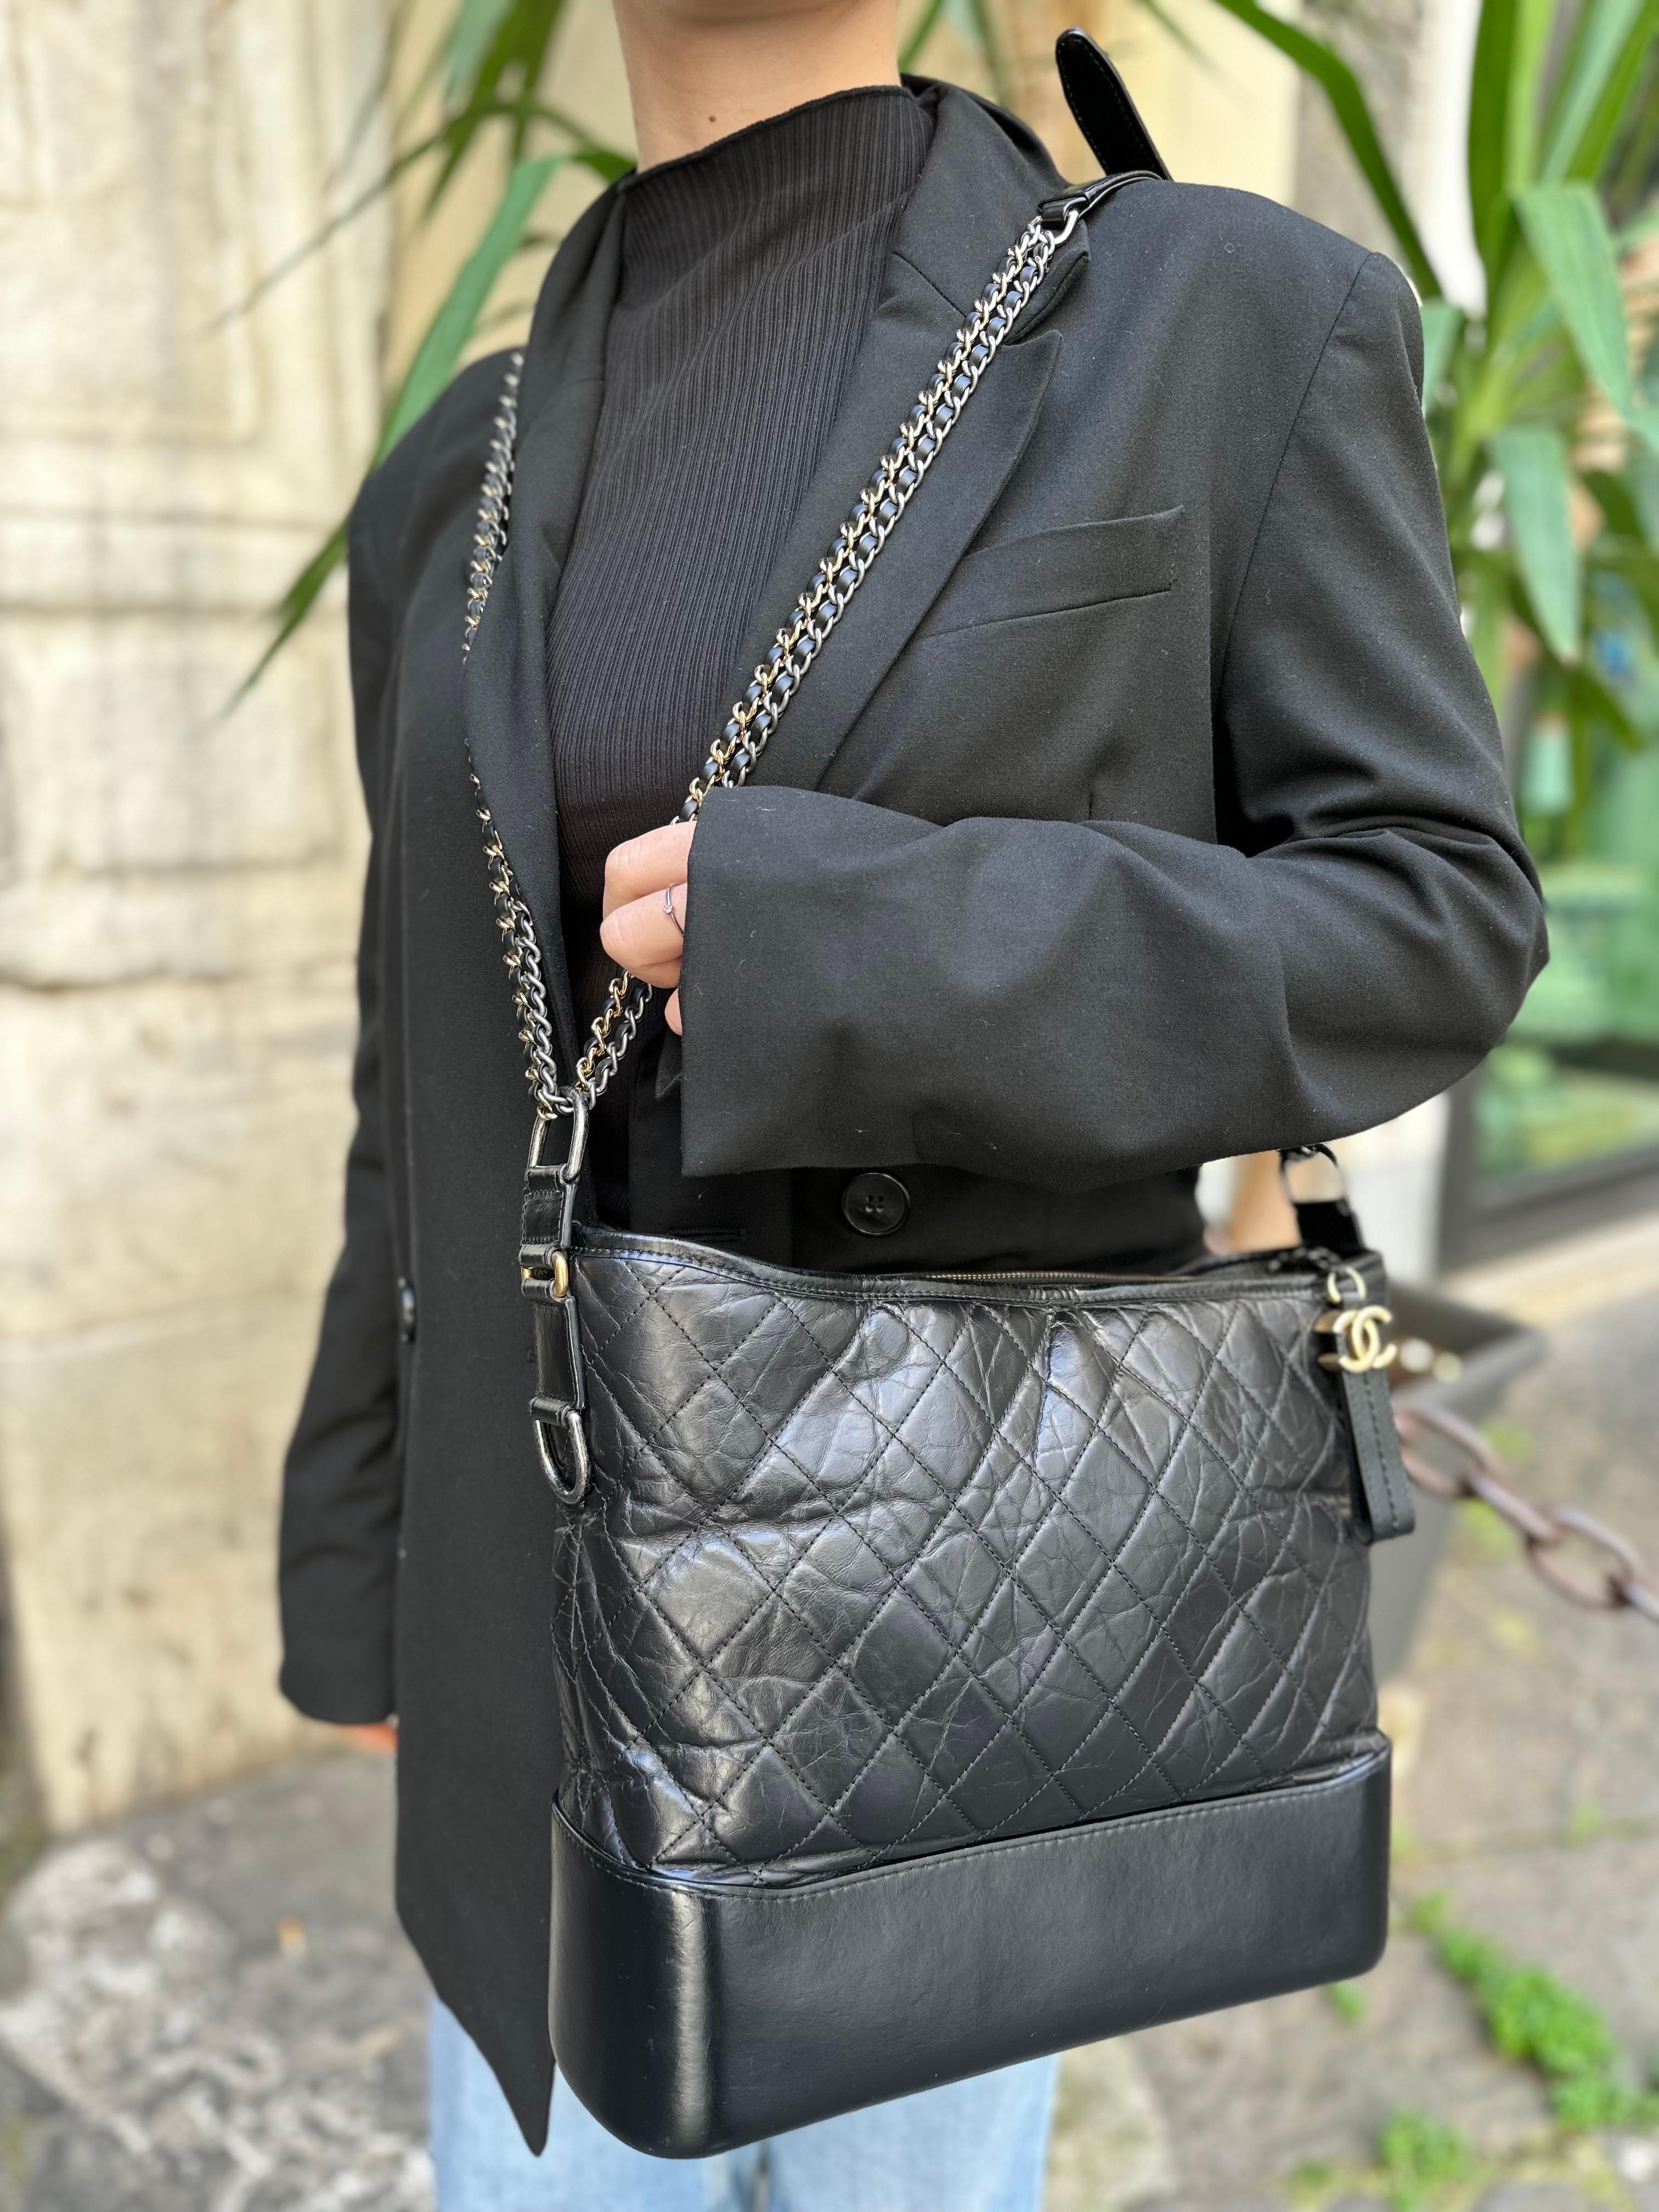 Women's 2018 Chanel Gabrielle Maxi Black Leather Top Shoulder Bag For Sale